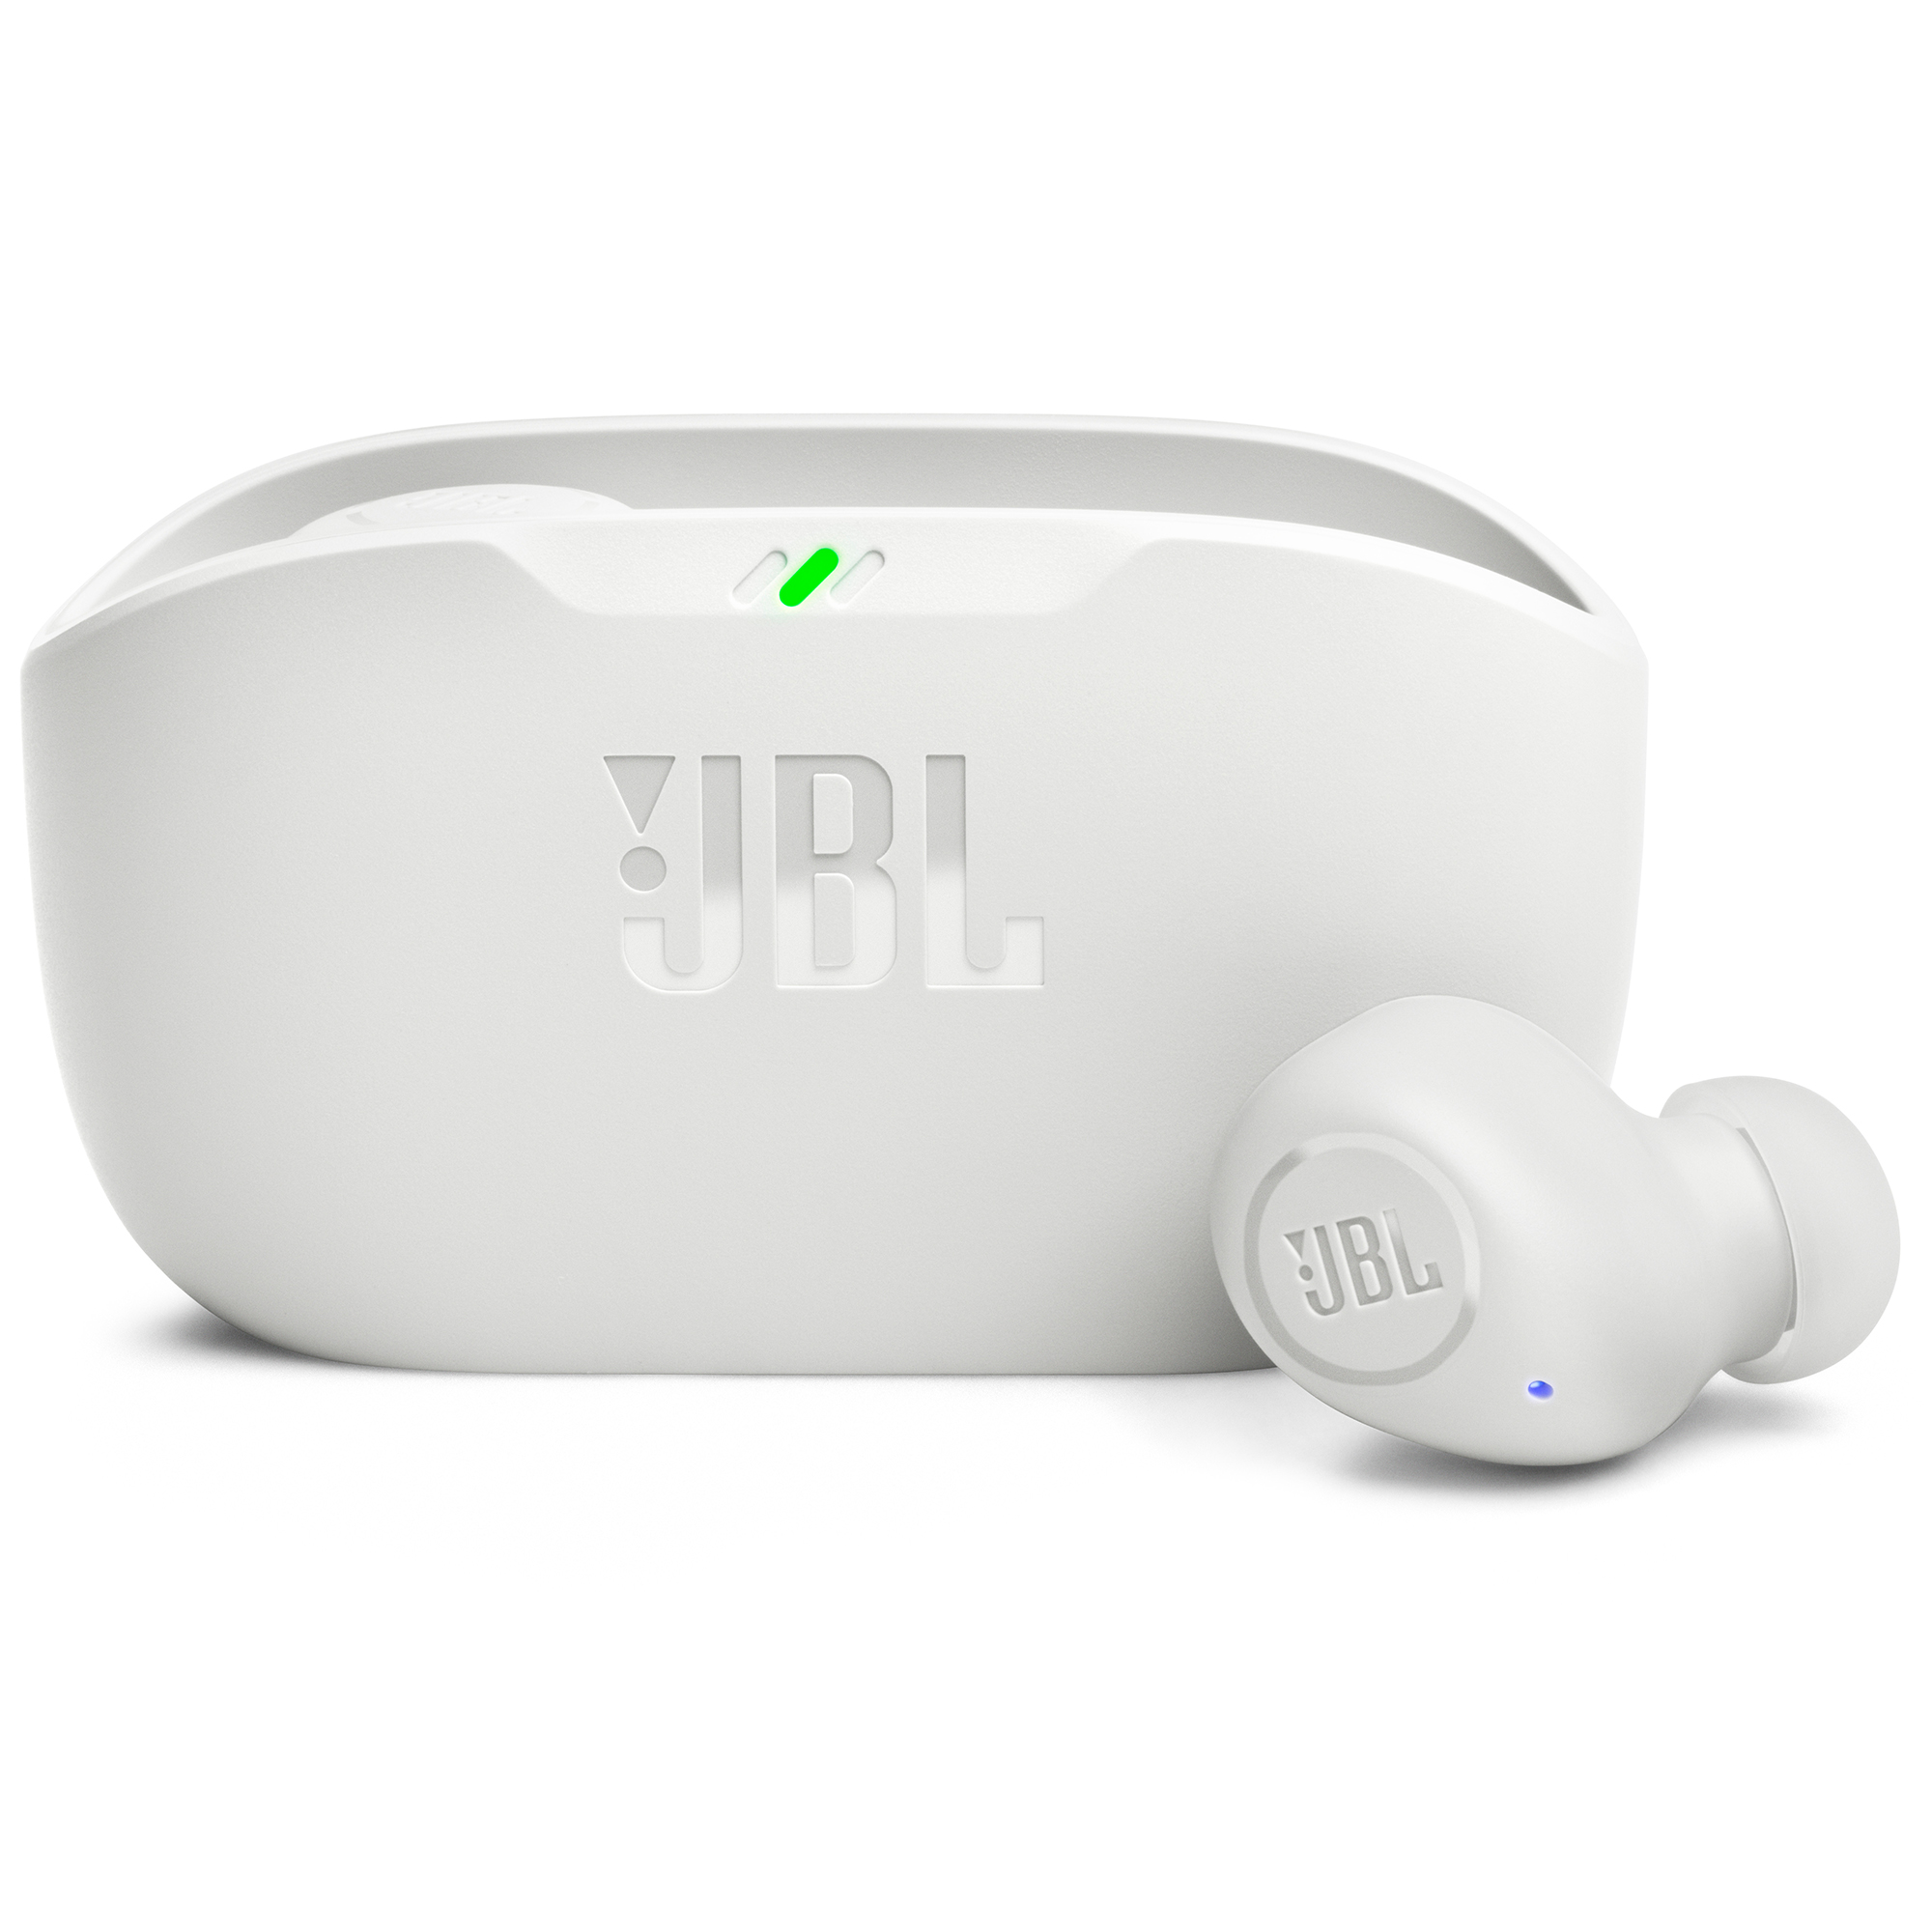 JBL Wave Buds True Wireless Headphones